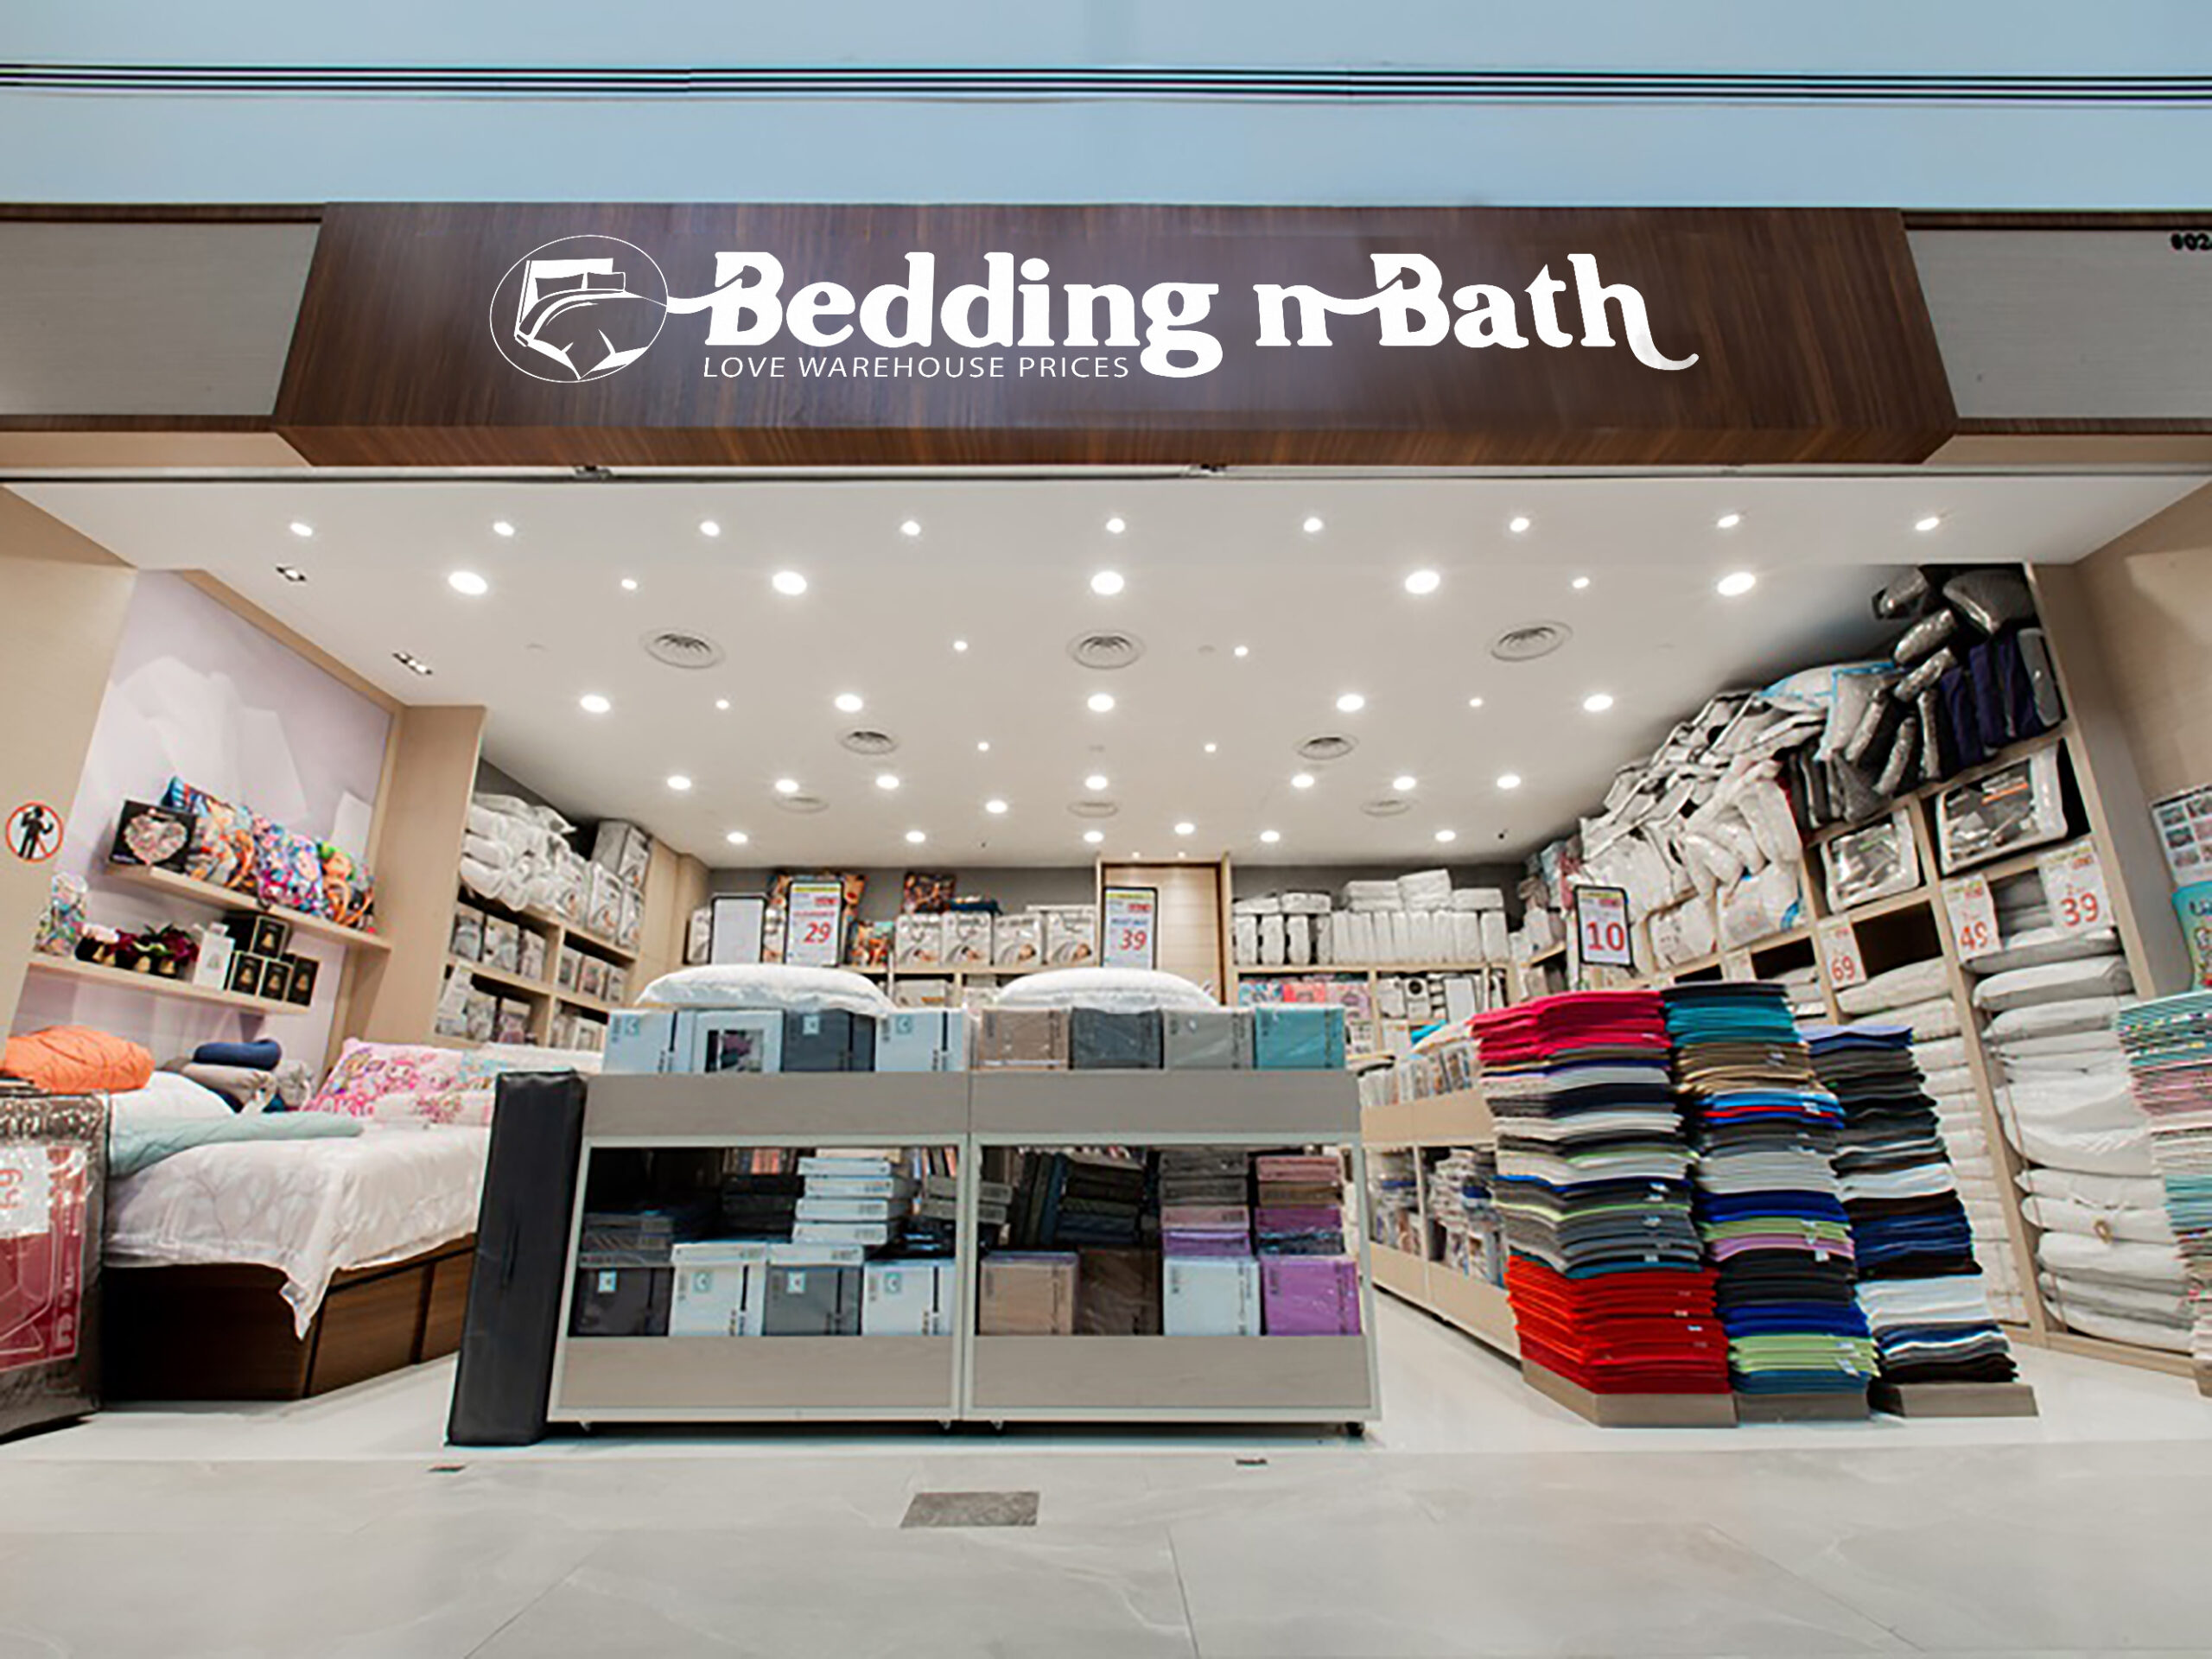 Consider Using Bedding N Bath White sheets